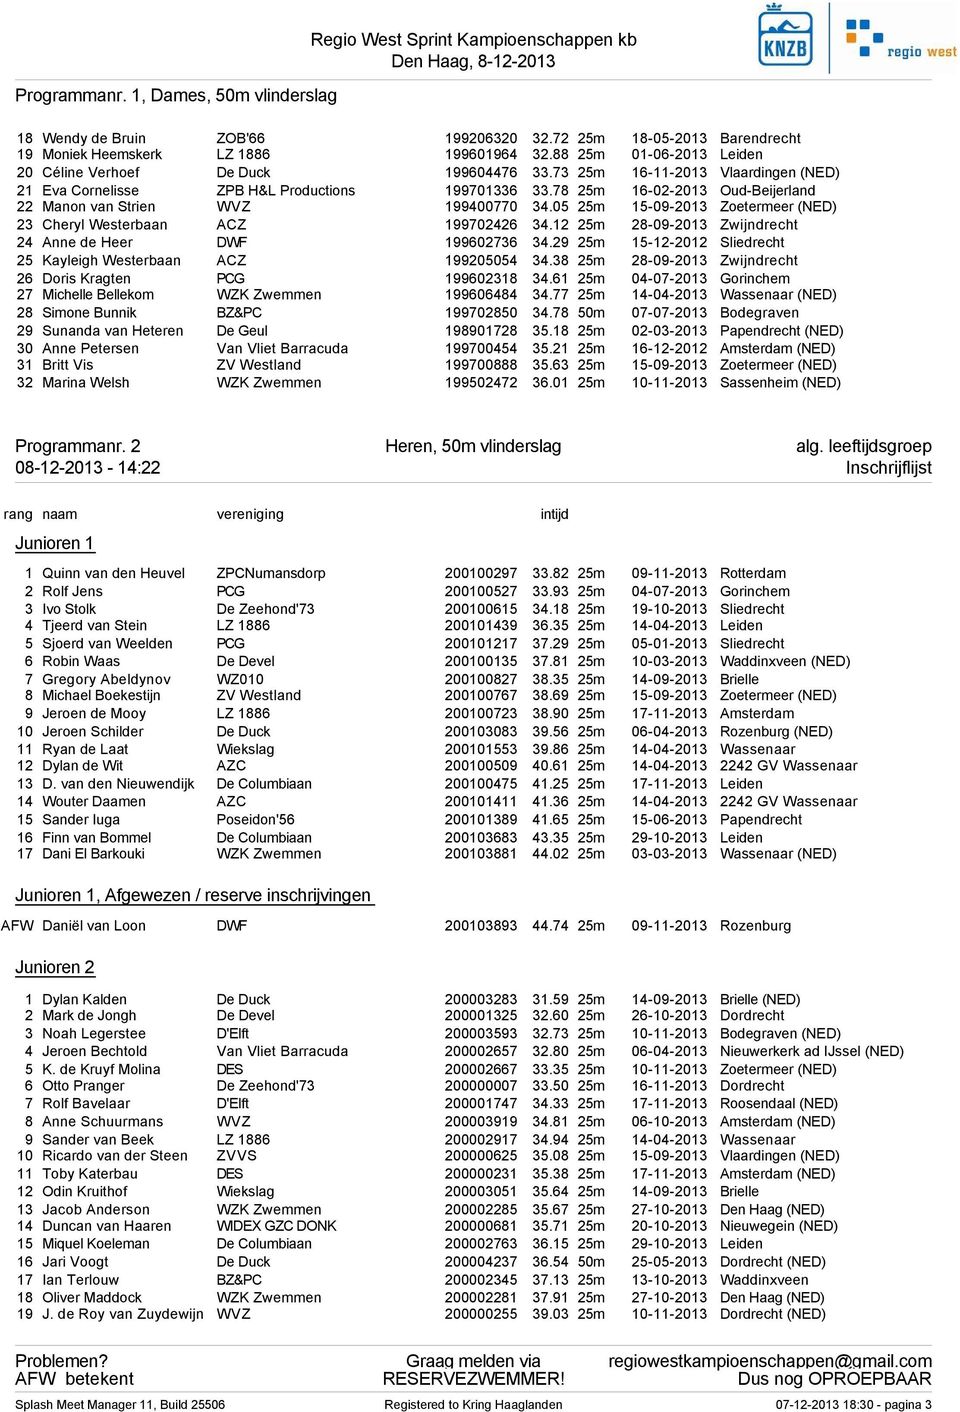 78 25m 16-02-2013 Oud-Beijerland 22 Manon van Strien WVZ 199400770 34.05 25m 15-09-2013 Zoetermeer (NED) 23 Cheryl Westerbaan ACZ 199702426 34.